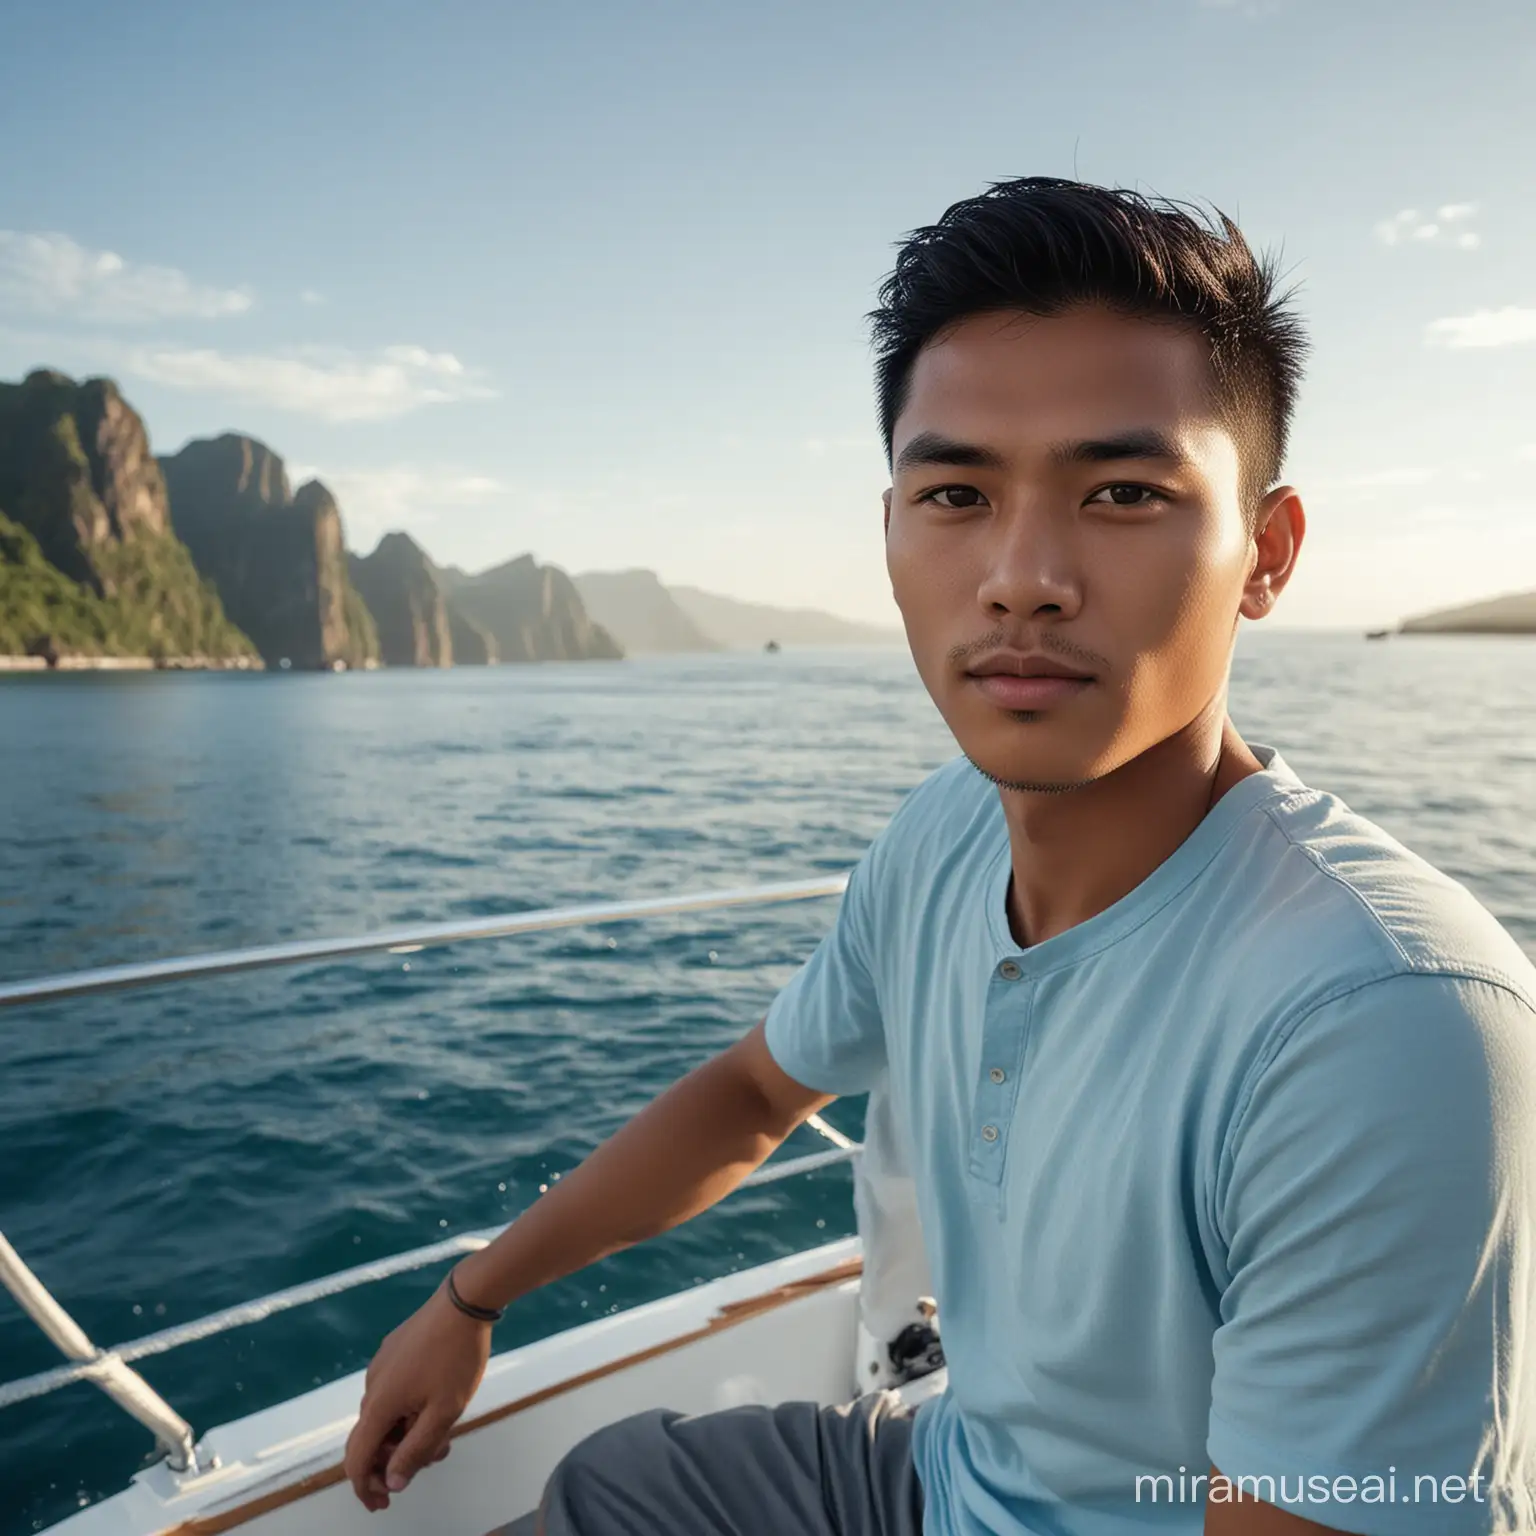 Gambar photo super HD, seorang pria muda Indonesia yang ganteng, kulit putih. Pria tersebut memakai kemeja pendek warna biru terang, sedang duduk di atas kapal yang mewah ditengah laut. Gambar sangat akurat, wajah sangat jelas keaslian nya, efek cahaya sejuk pemandangan di tengah laut. 